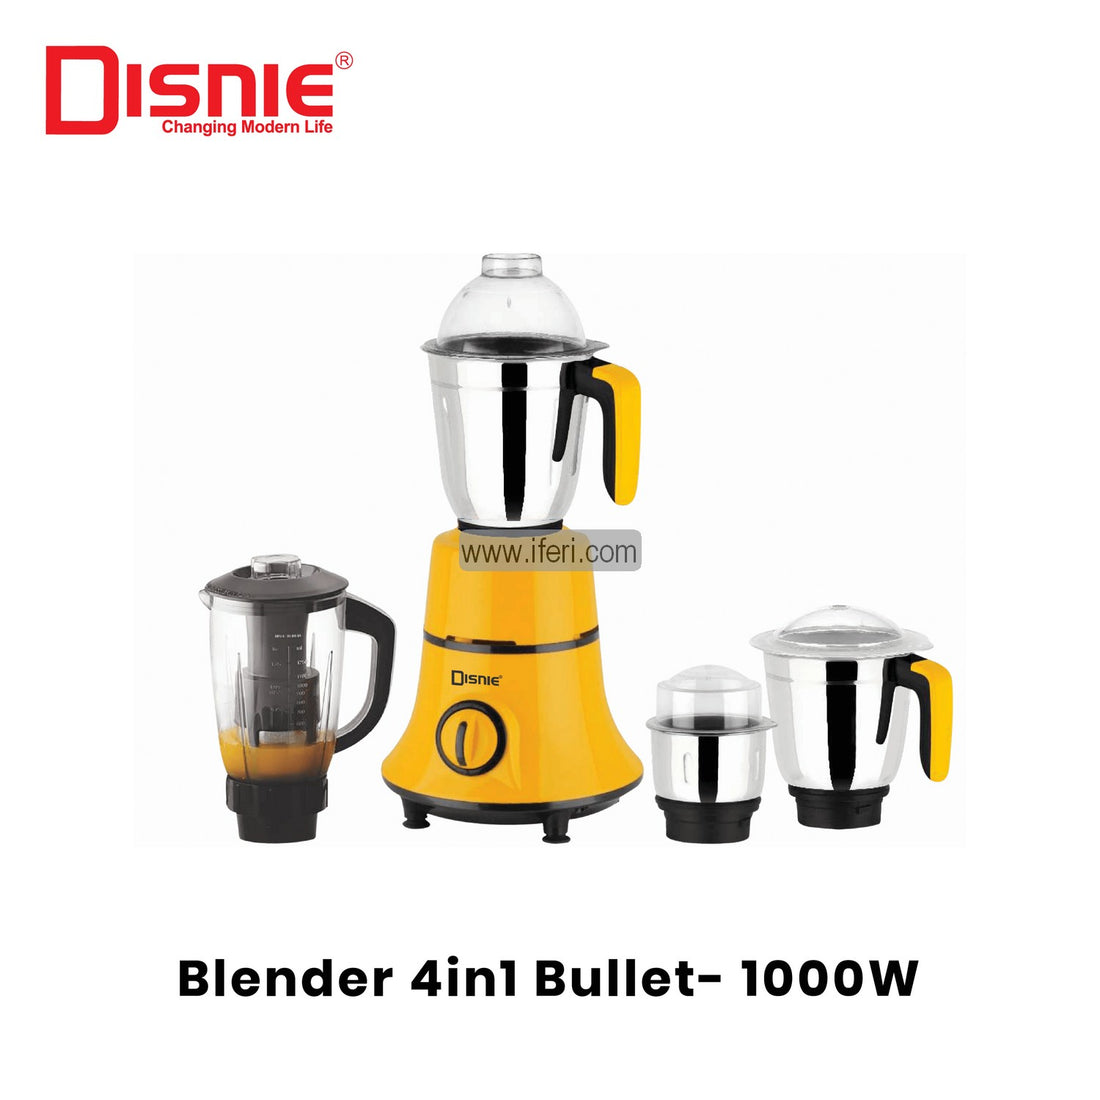 Buy Mixer Grinder Blender through online from iferi.com